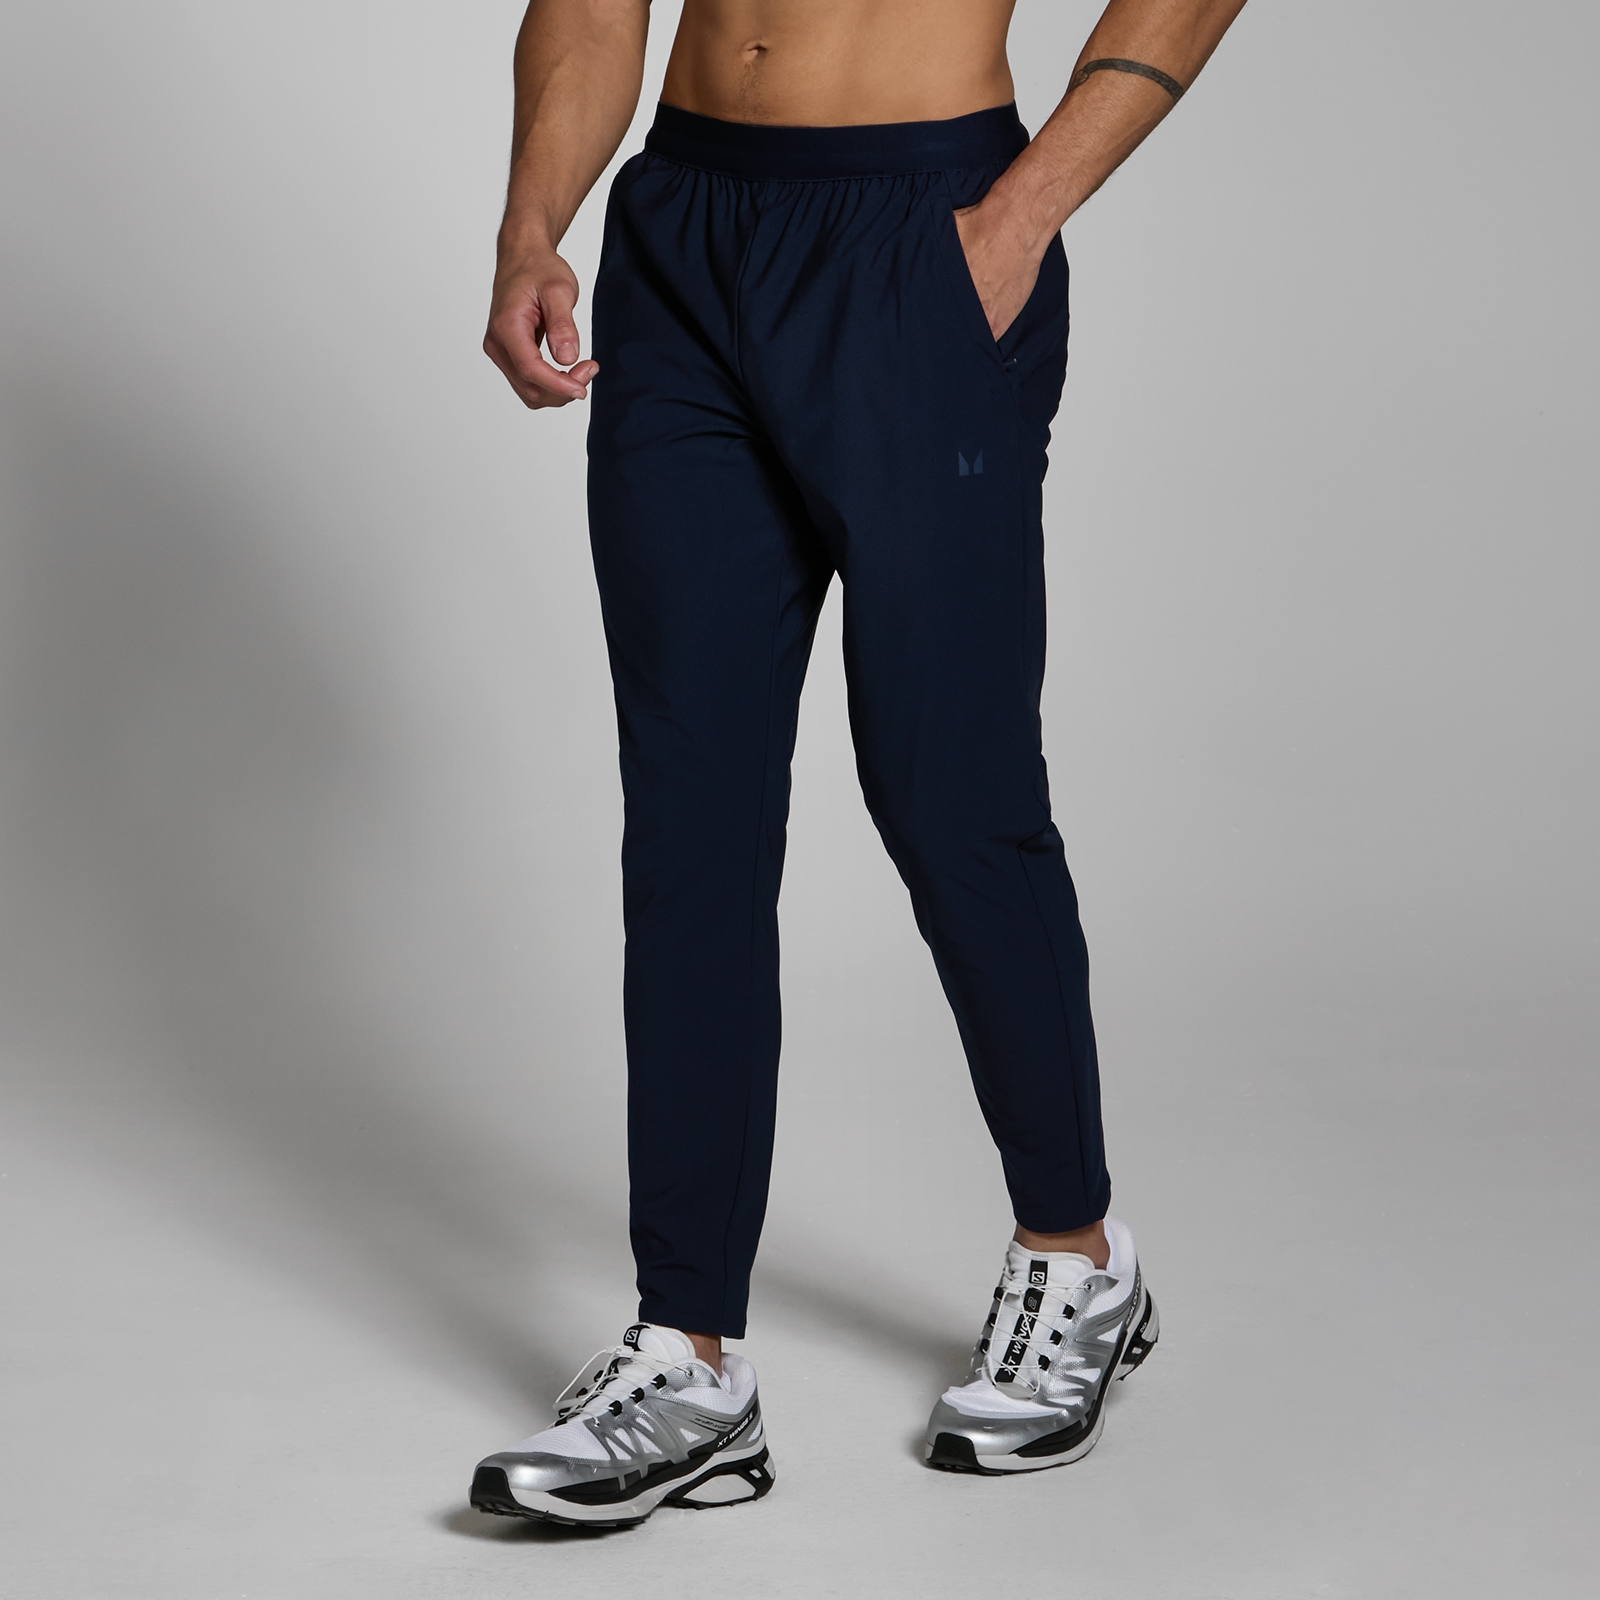 Image of Pantaloni da jogging in tessuto MP Lifestyle da uomo - Blu navy scuro - XL